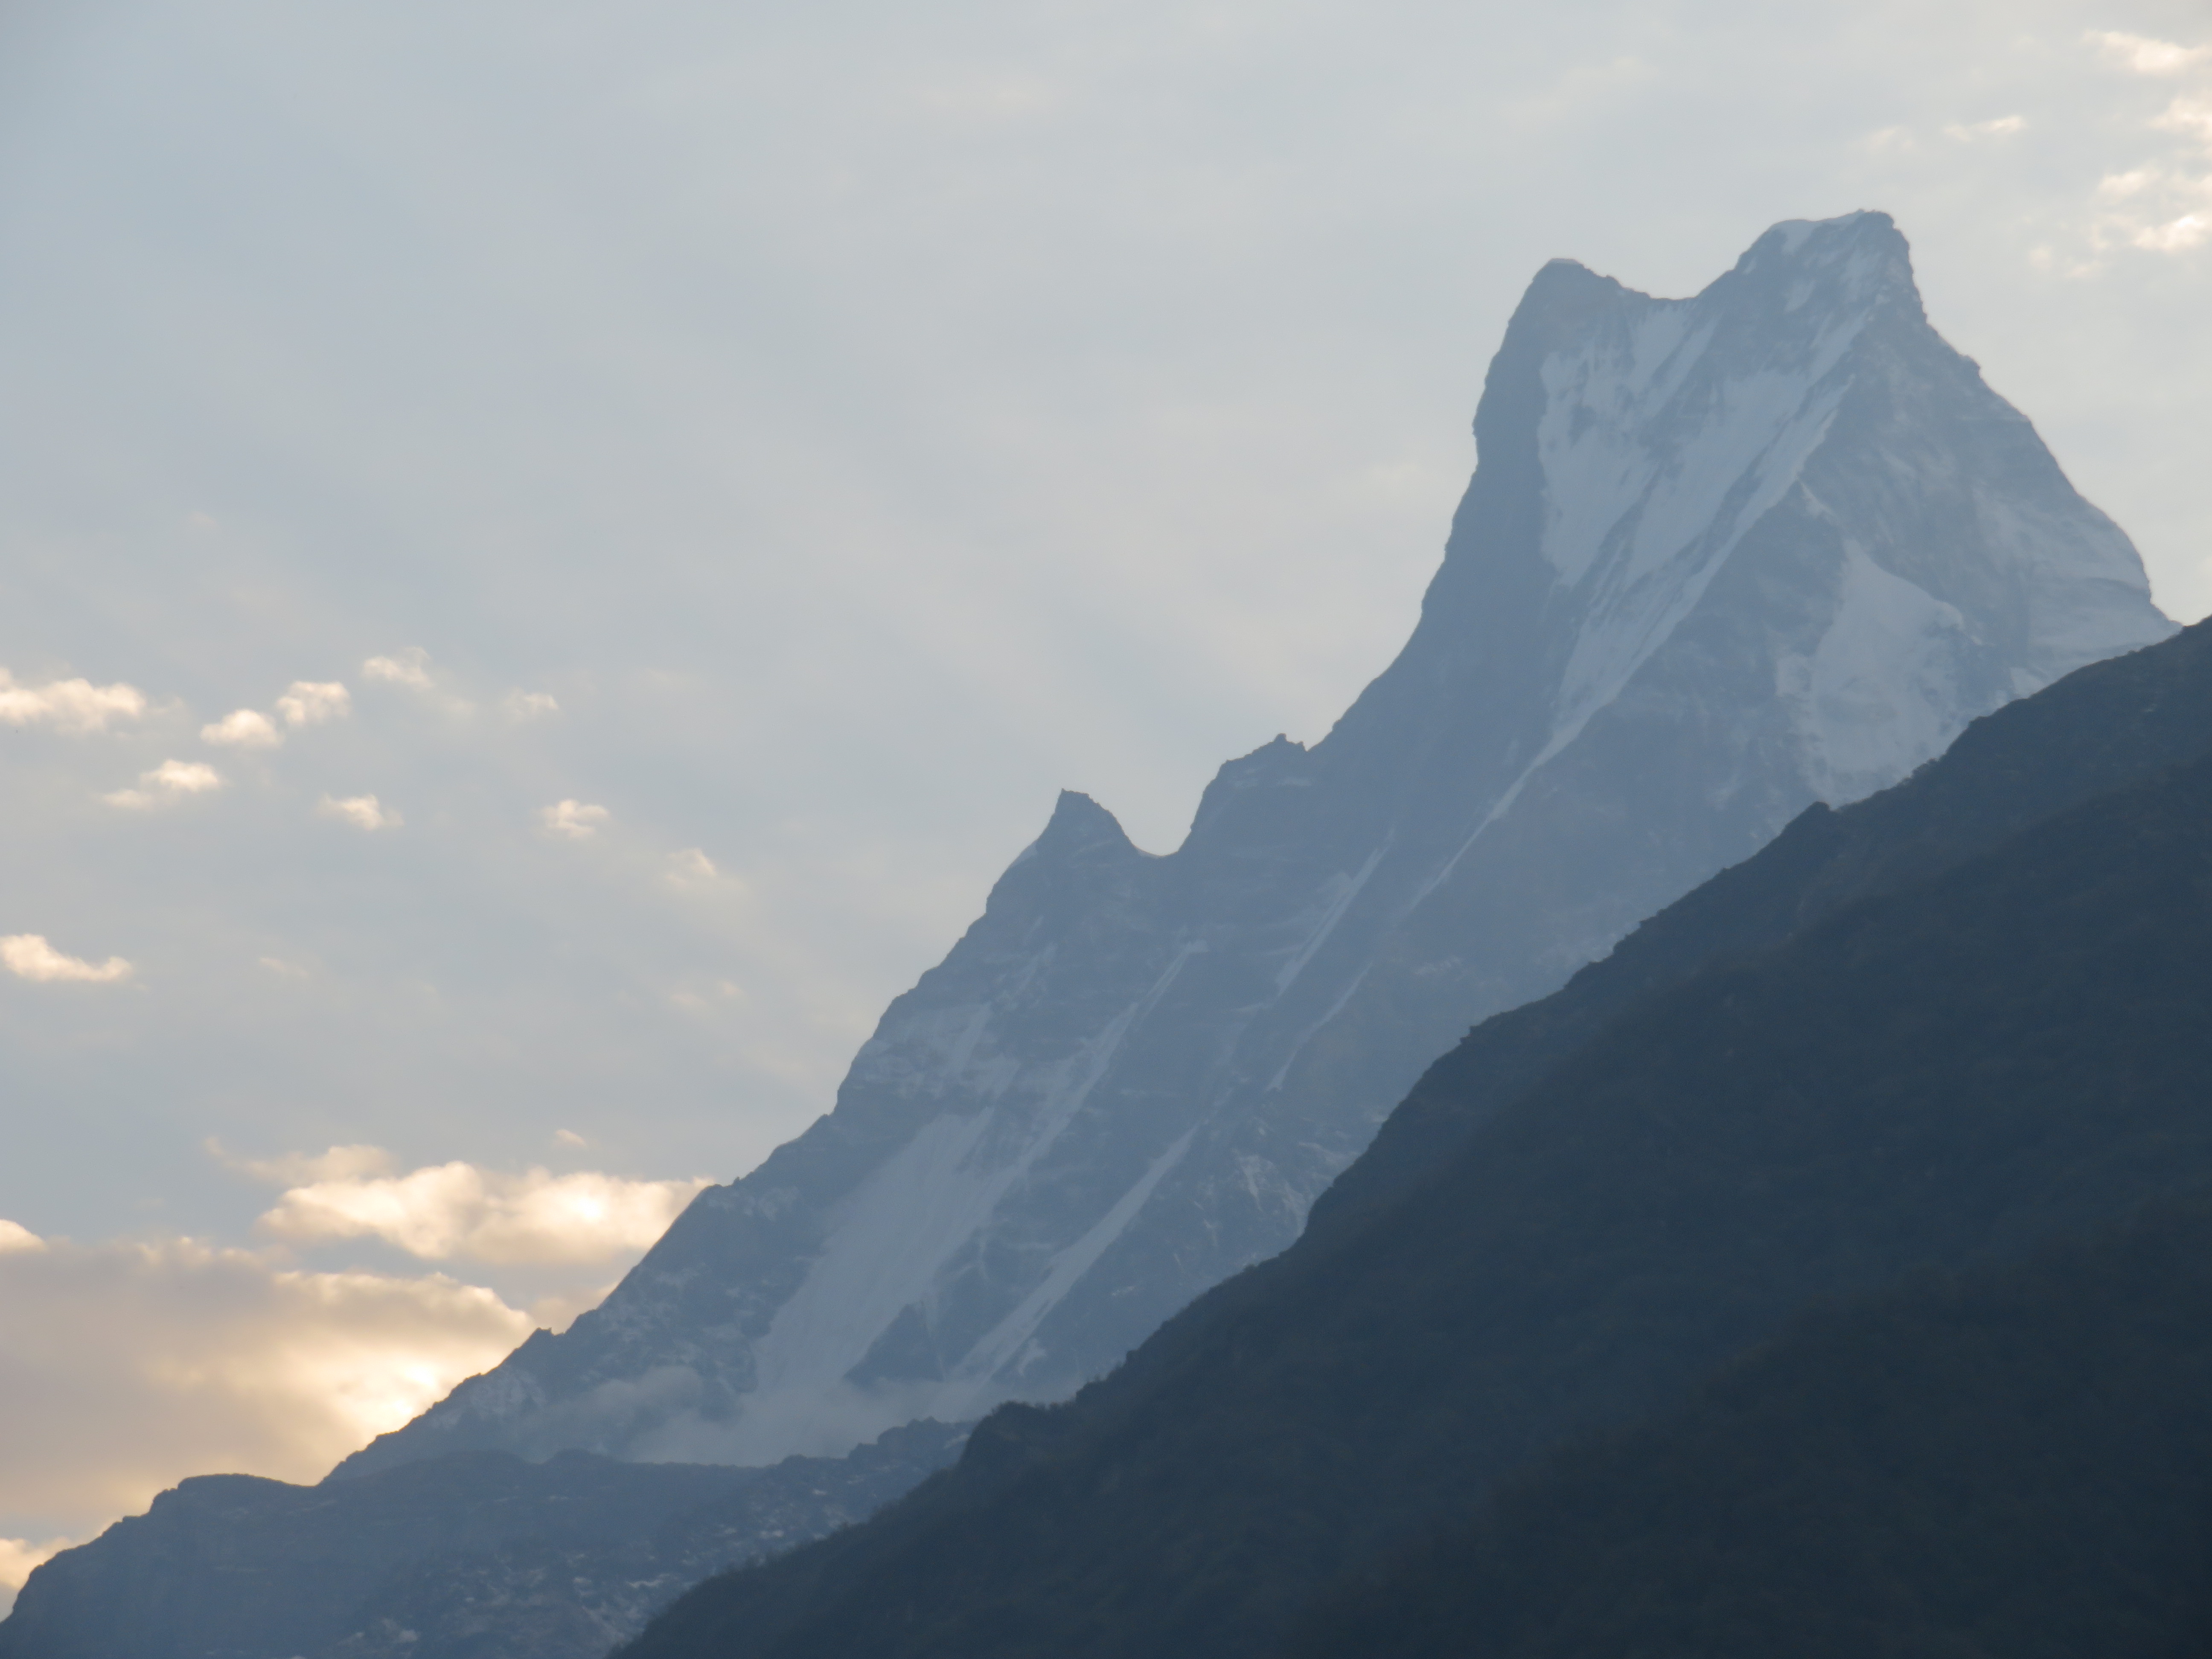 Fishtail Mountain in Nepal